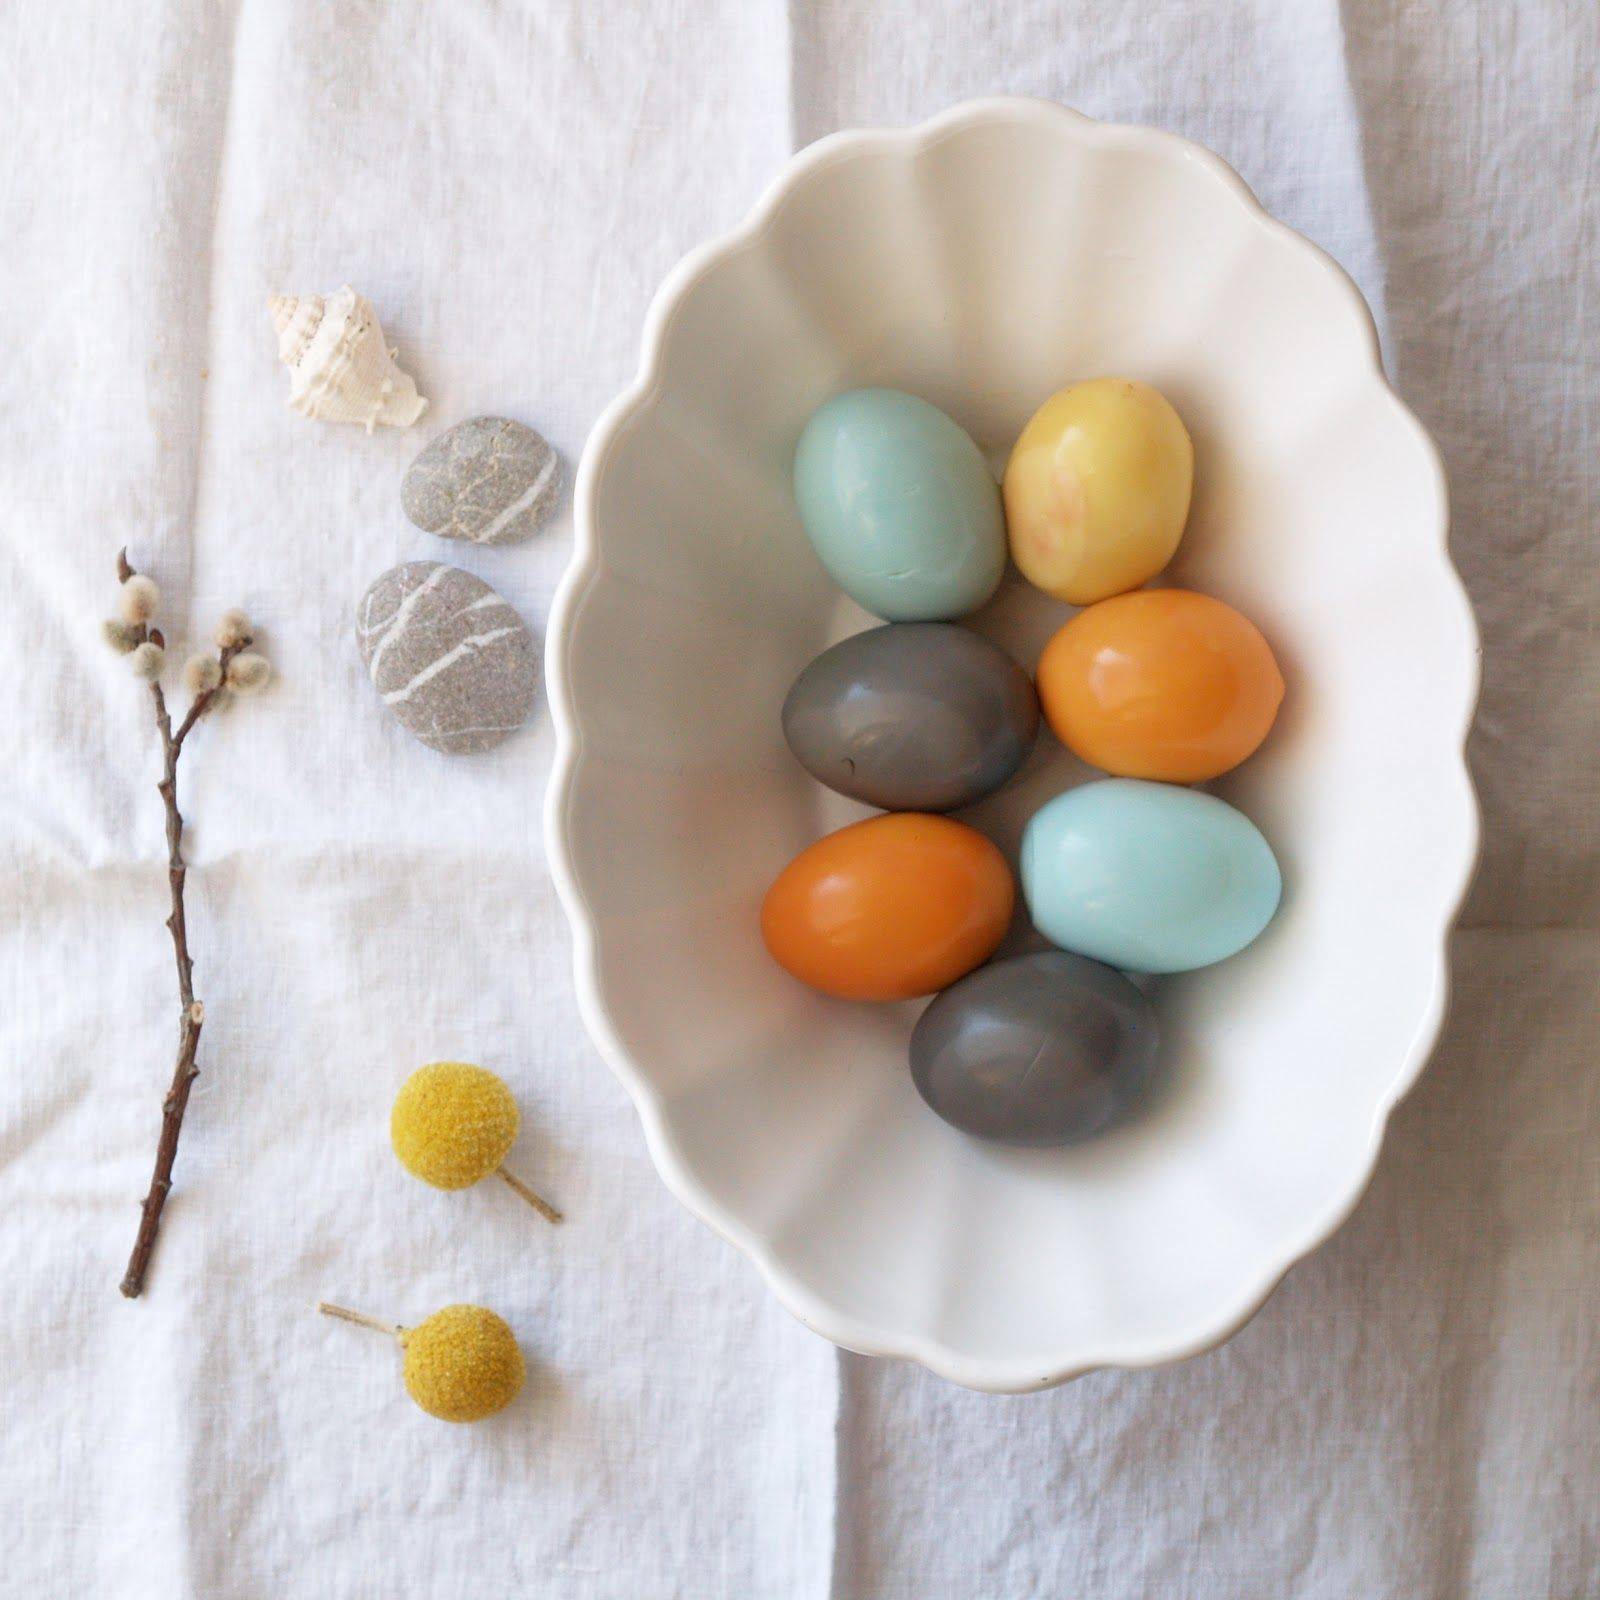 Как покрасить яйца на пасху 2021 красиво + новые идеи покраски яиц